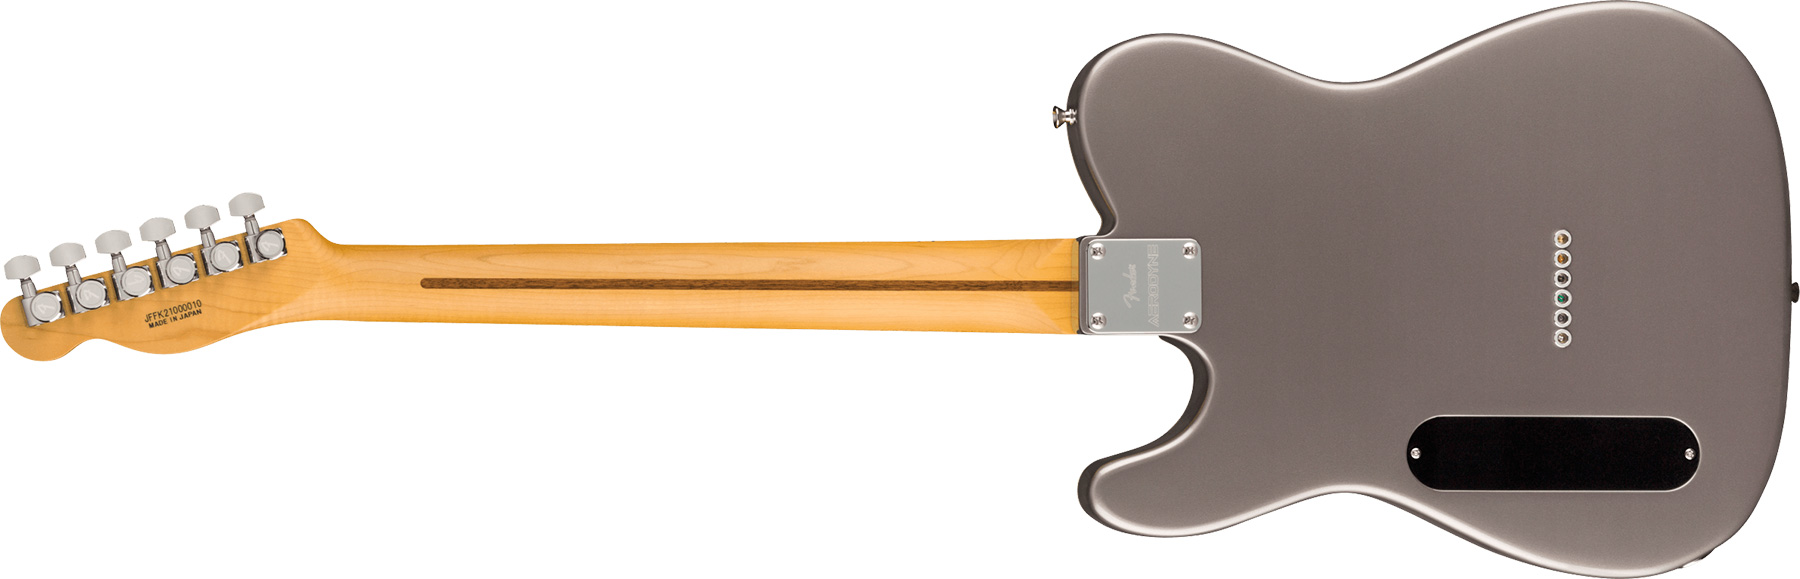 Fender Tele Aerodyne Special Jap 2s Ht Mn - Dolphin Gray Metallic - Tel shape electric guitar - Variation 1